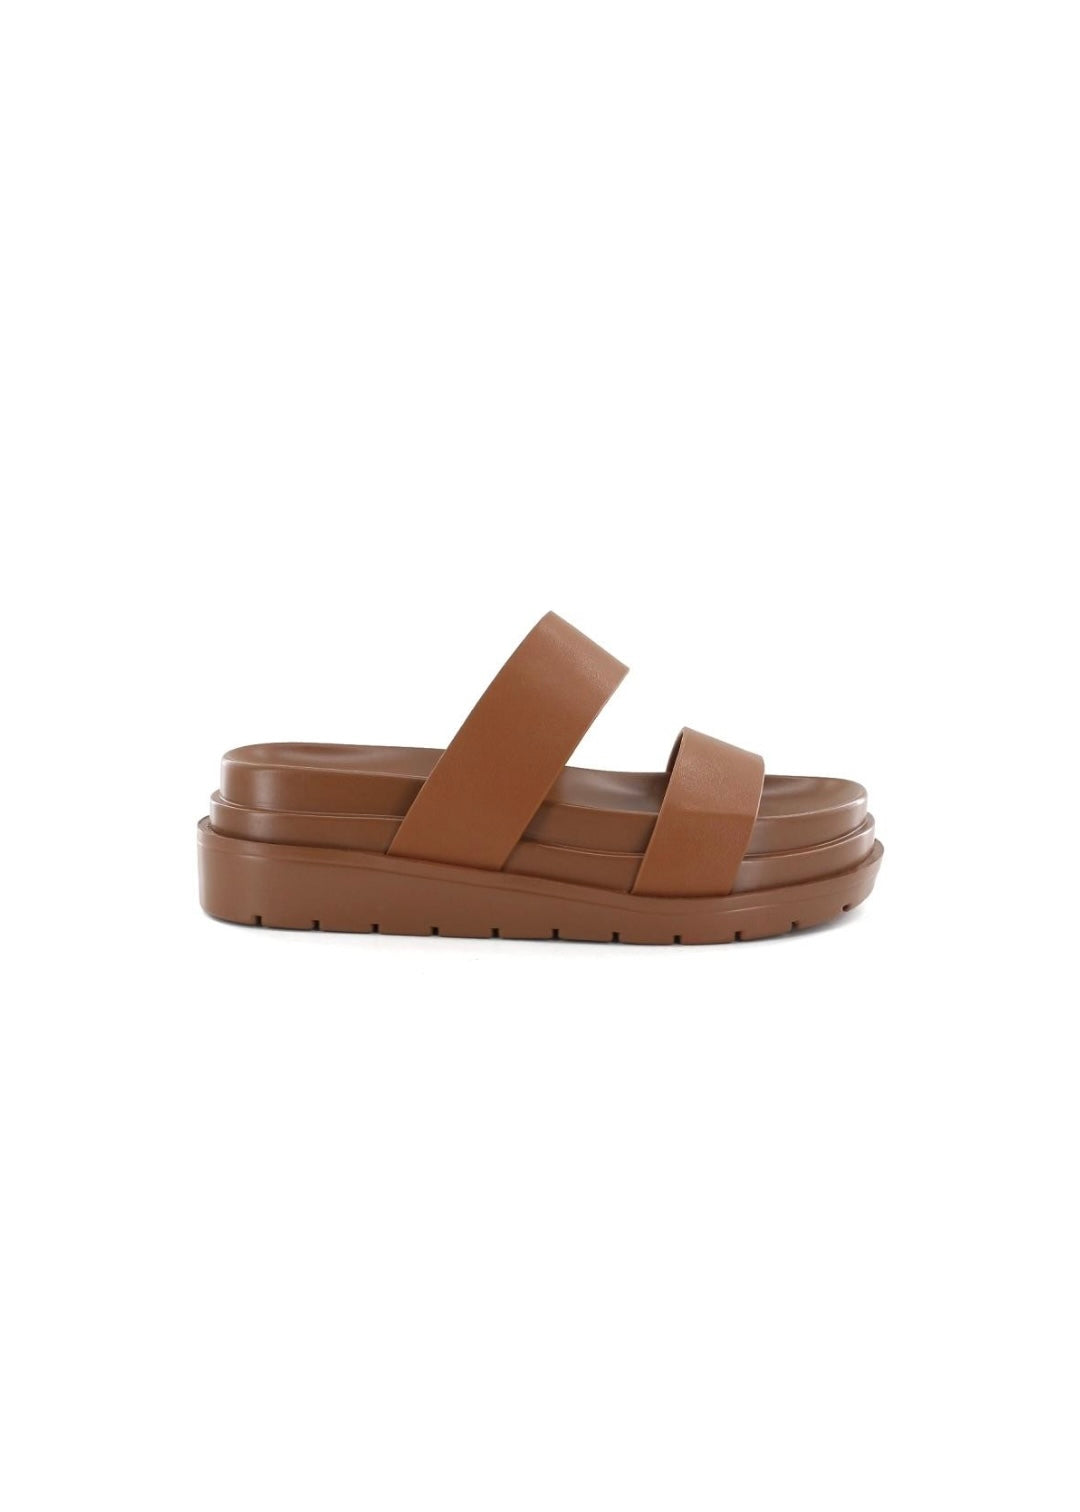 Perfectly Platform Sandals - MOCHA